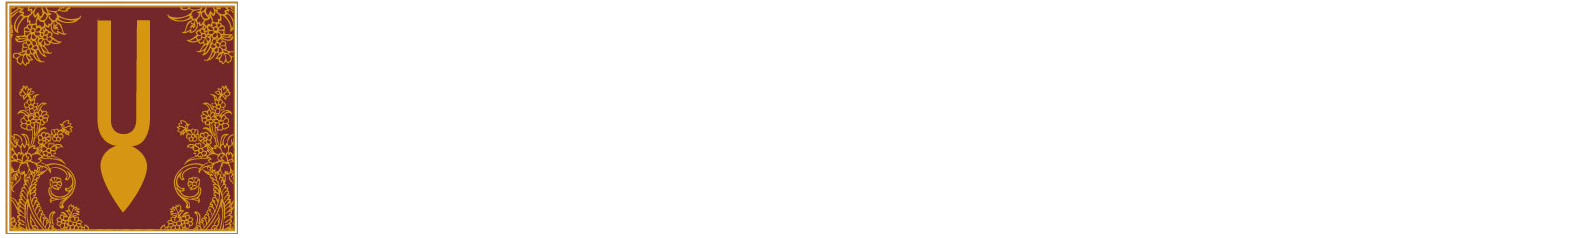 VedicSpirituality.com